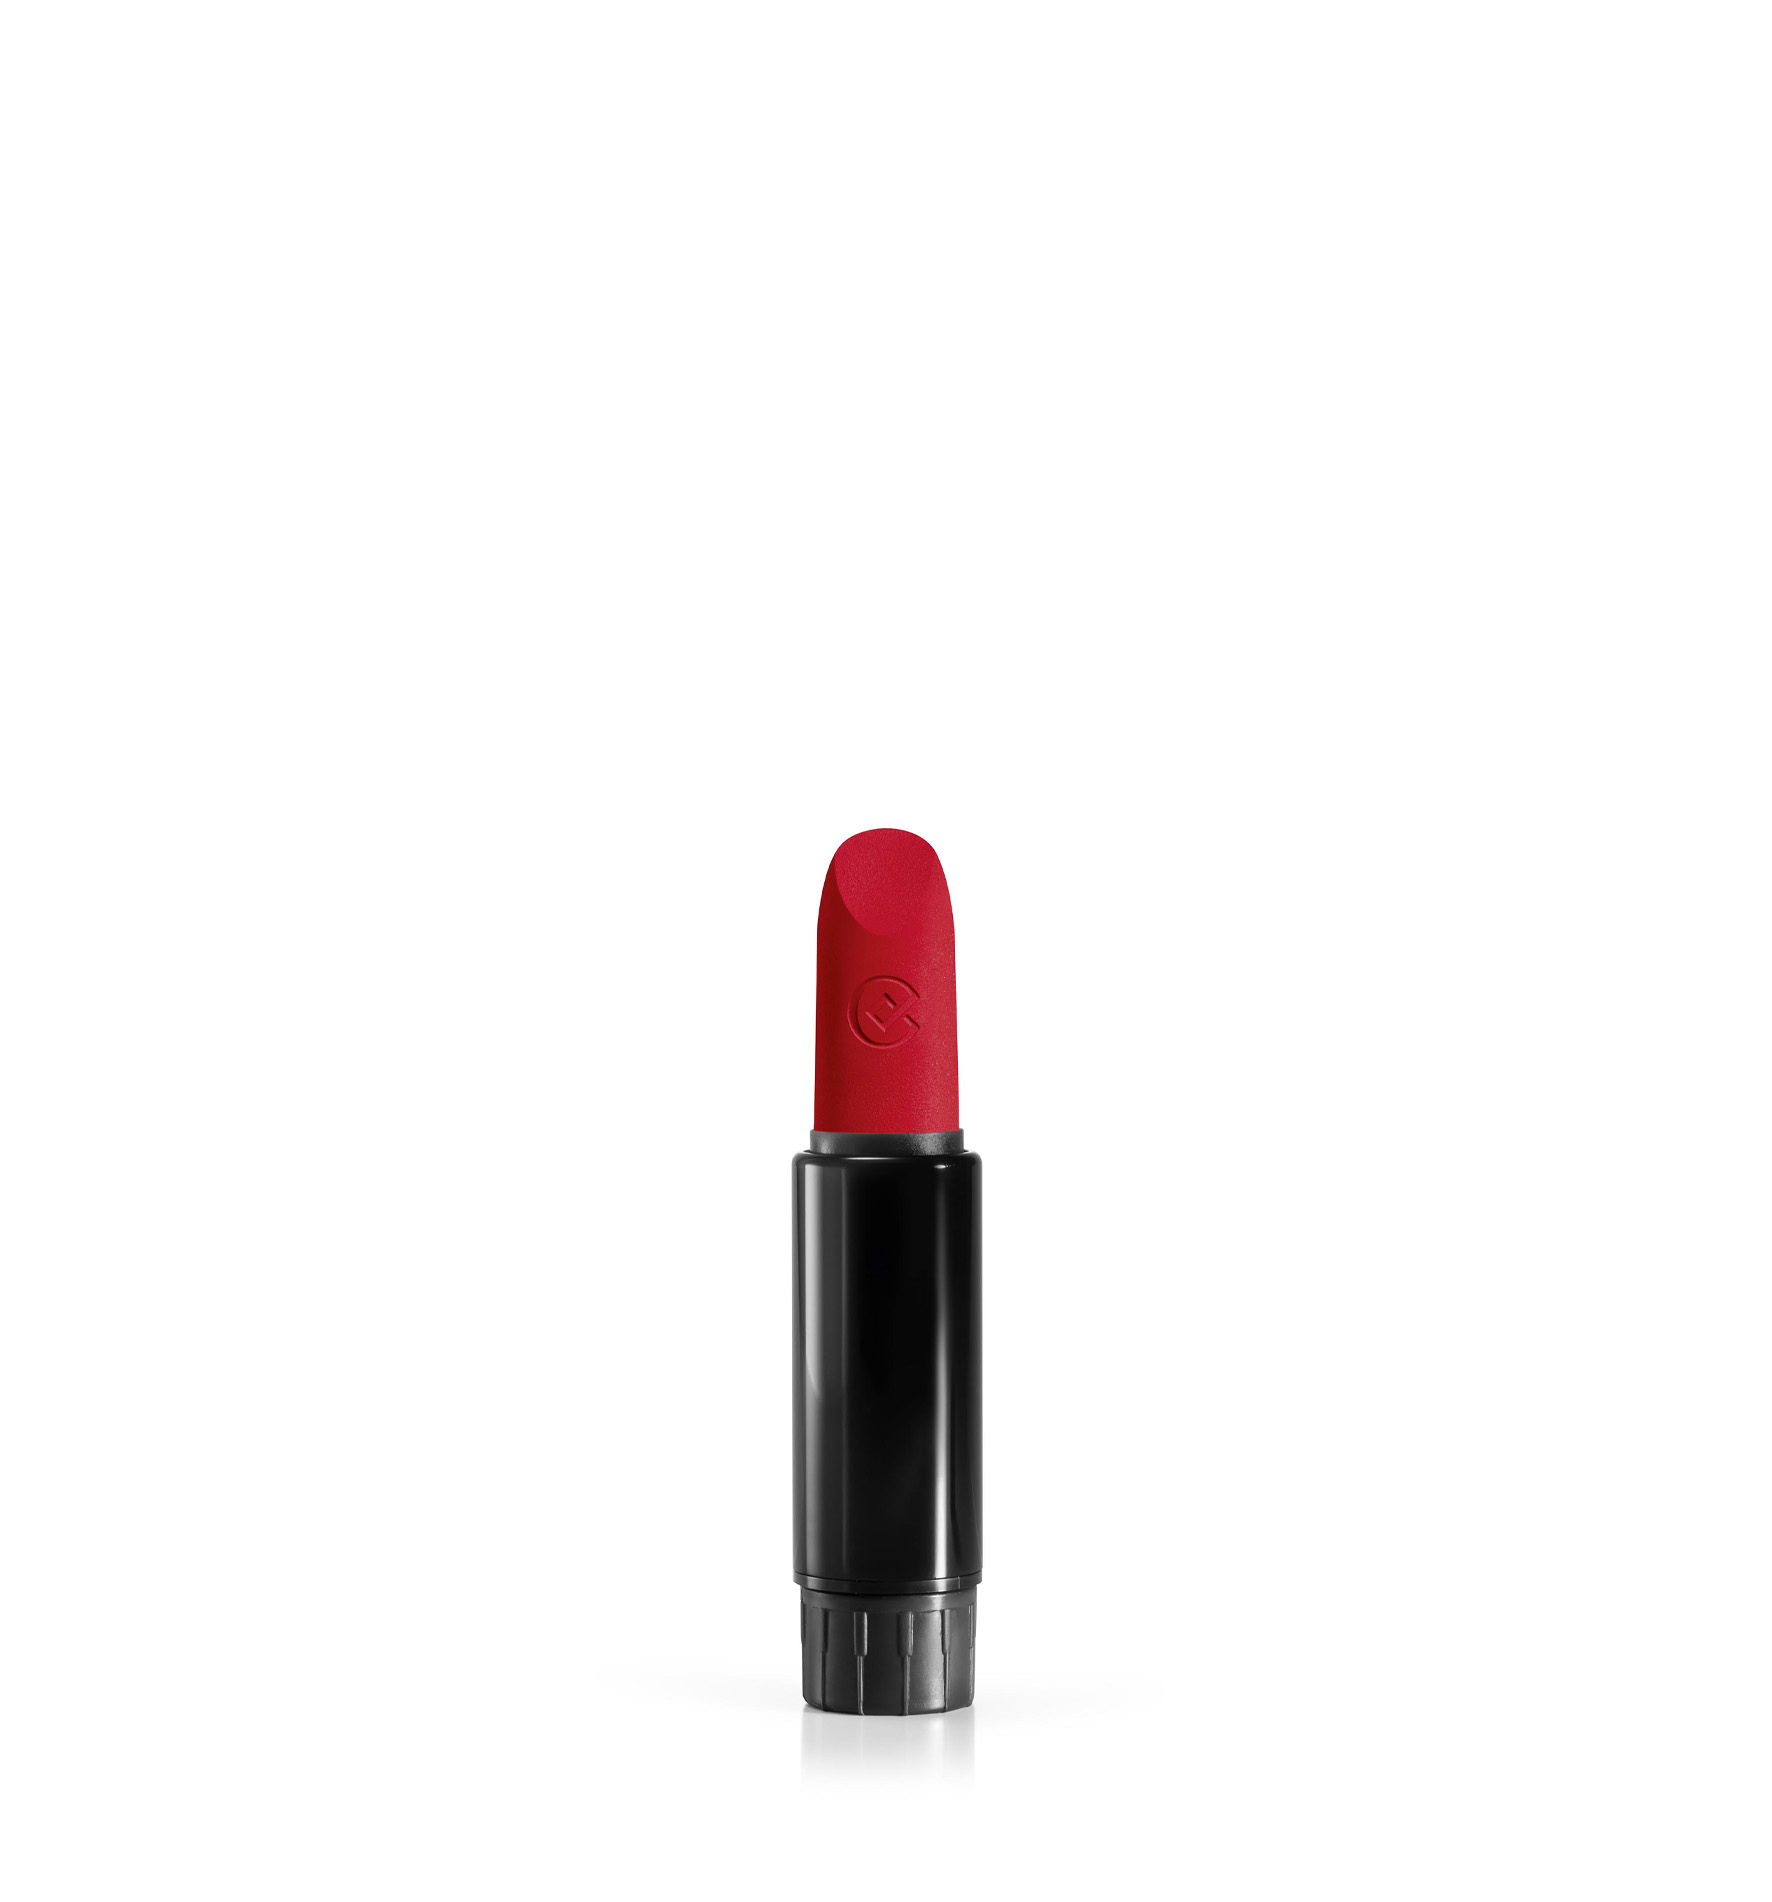 PURO MATTE LIPSTICK REFILL - Lipsticks | Collistar - Shop Online Ufficiale